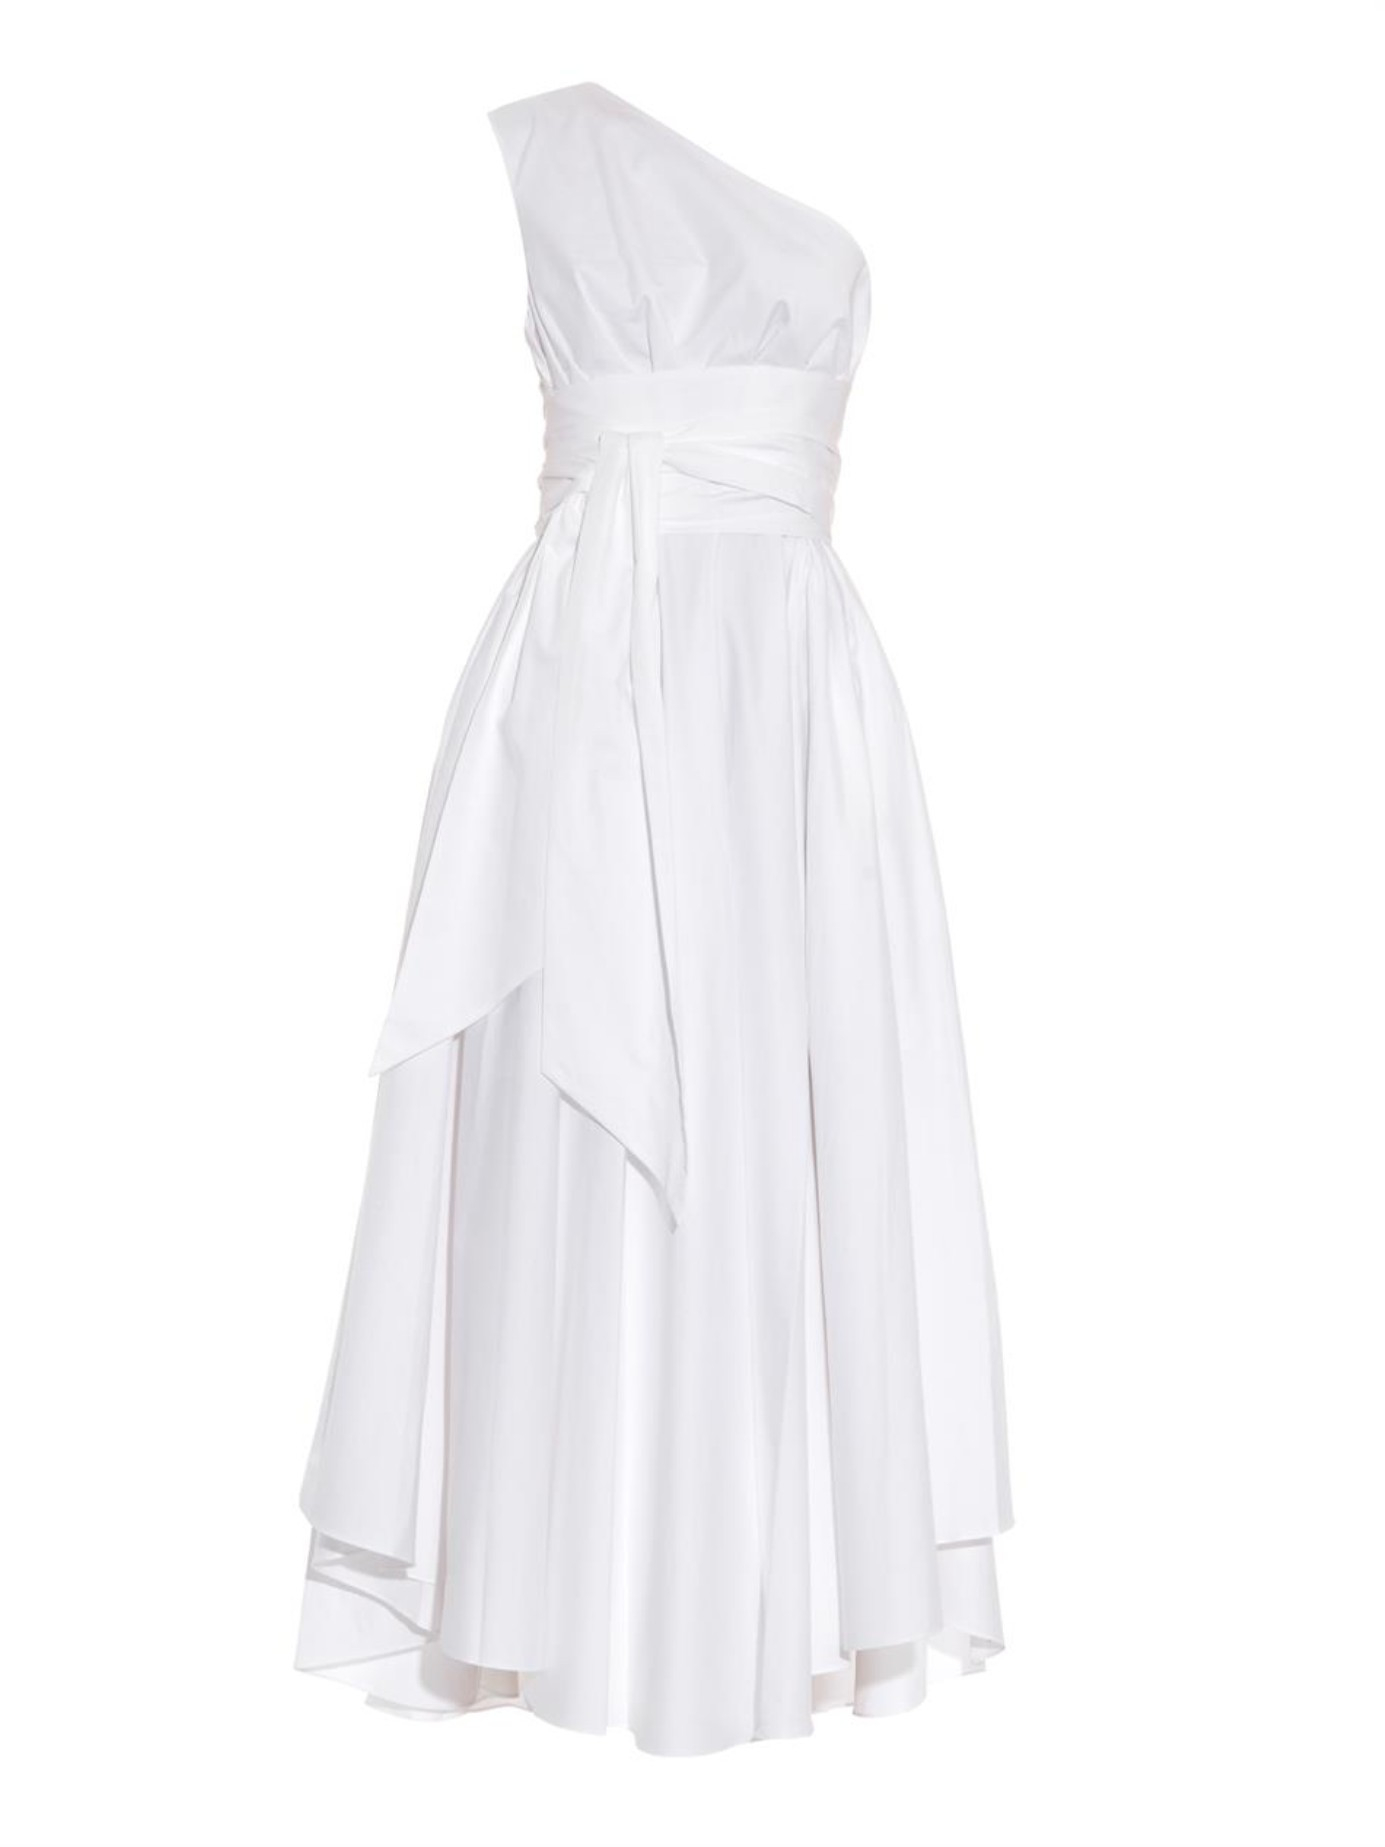 Lyst - Tibi One-Shoulder Cotton-Poplin Dress in White